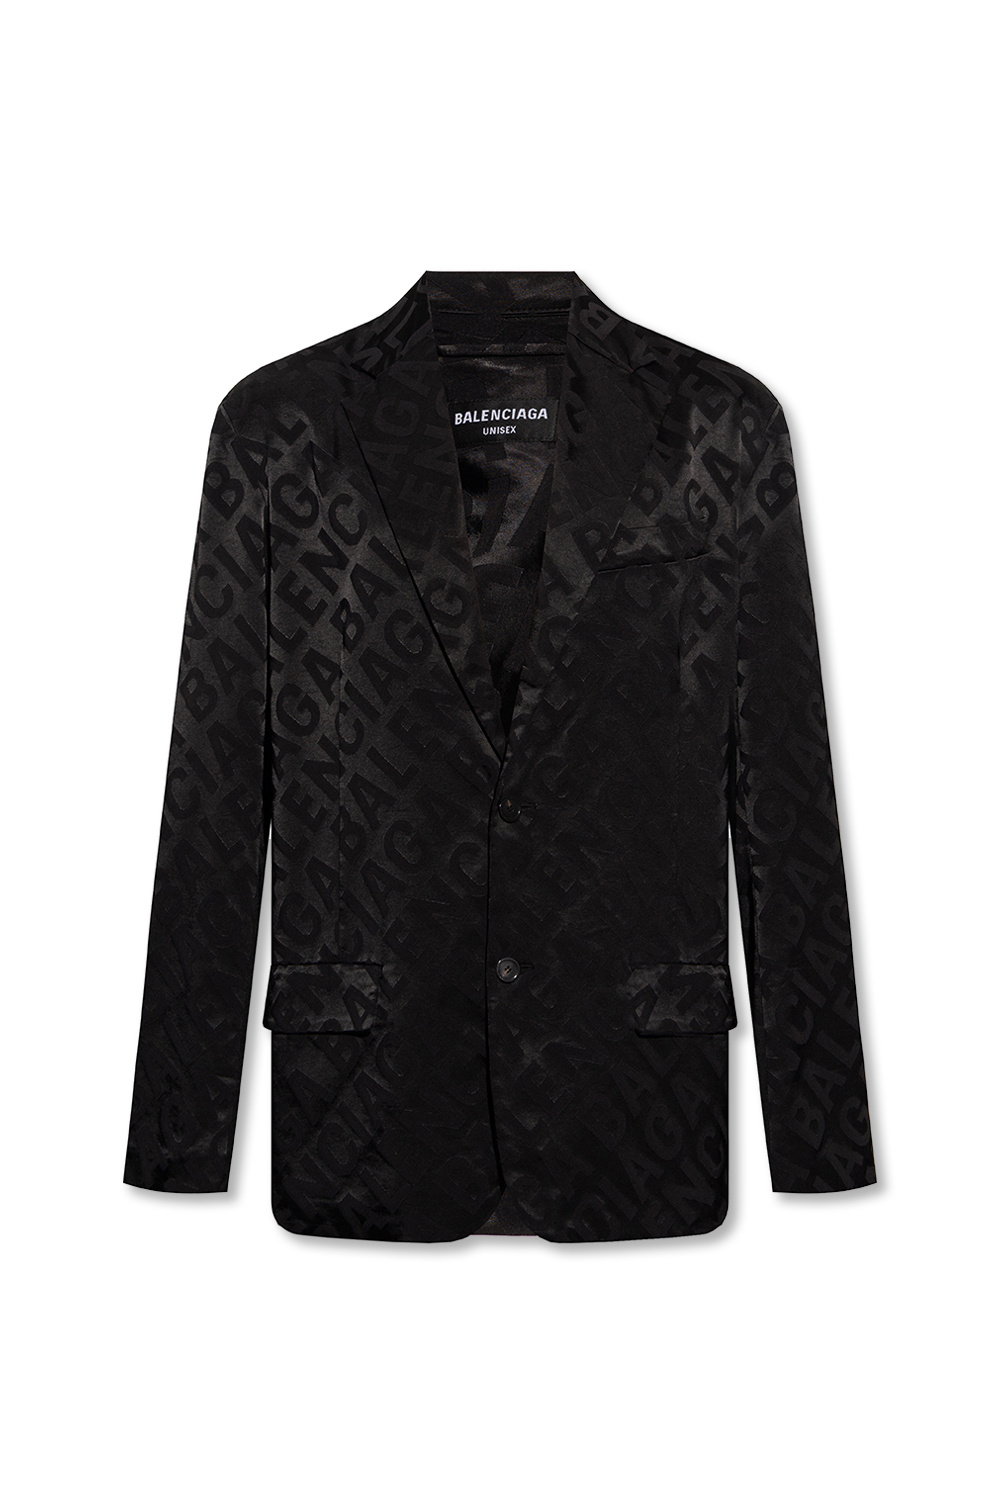 Balenciaga Blazers  Sport Coats for Men  Nordstrom